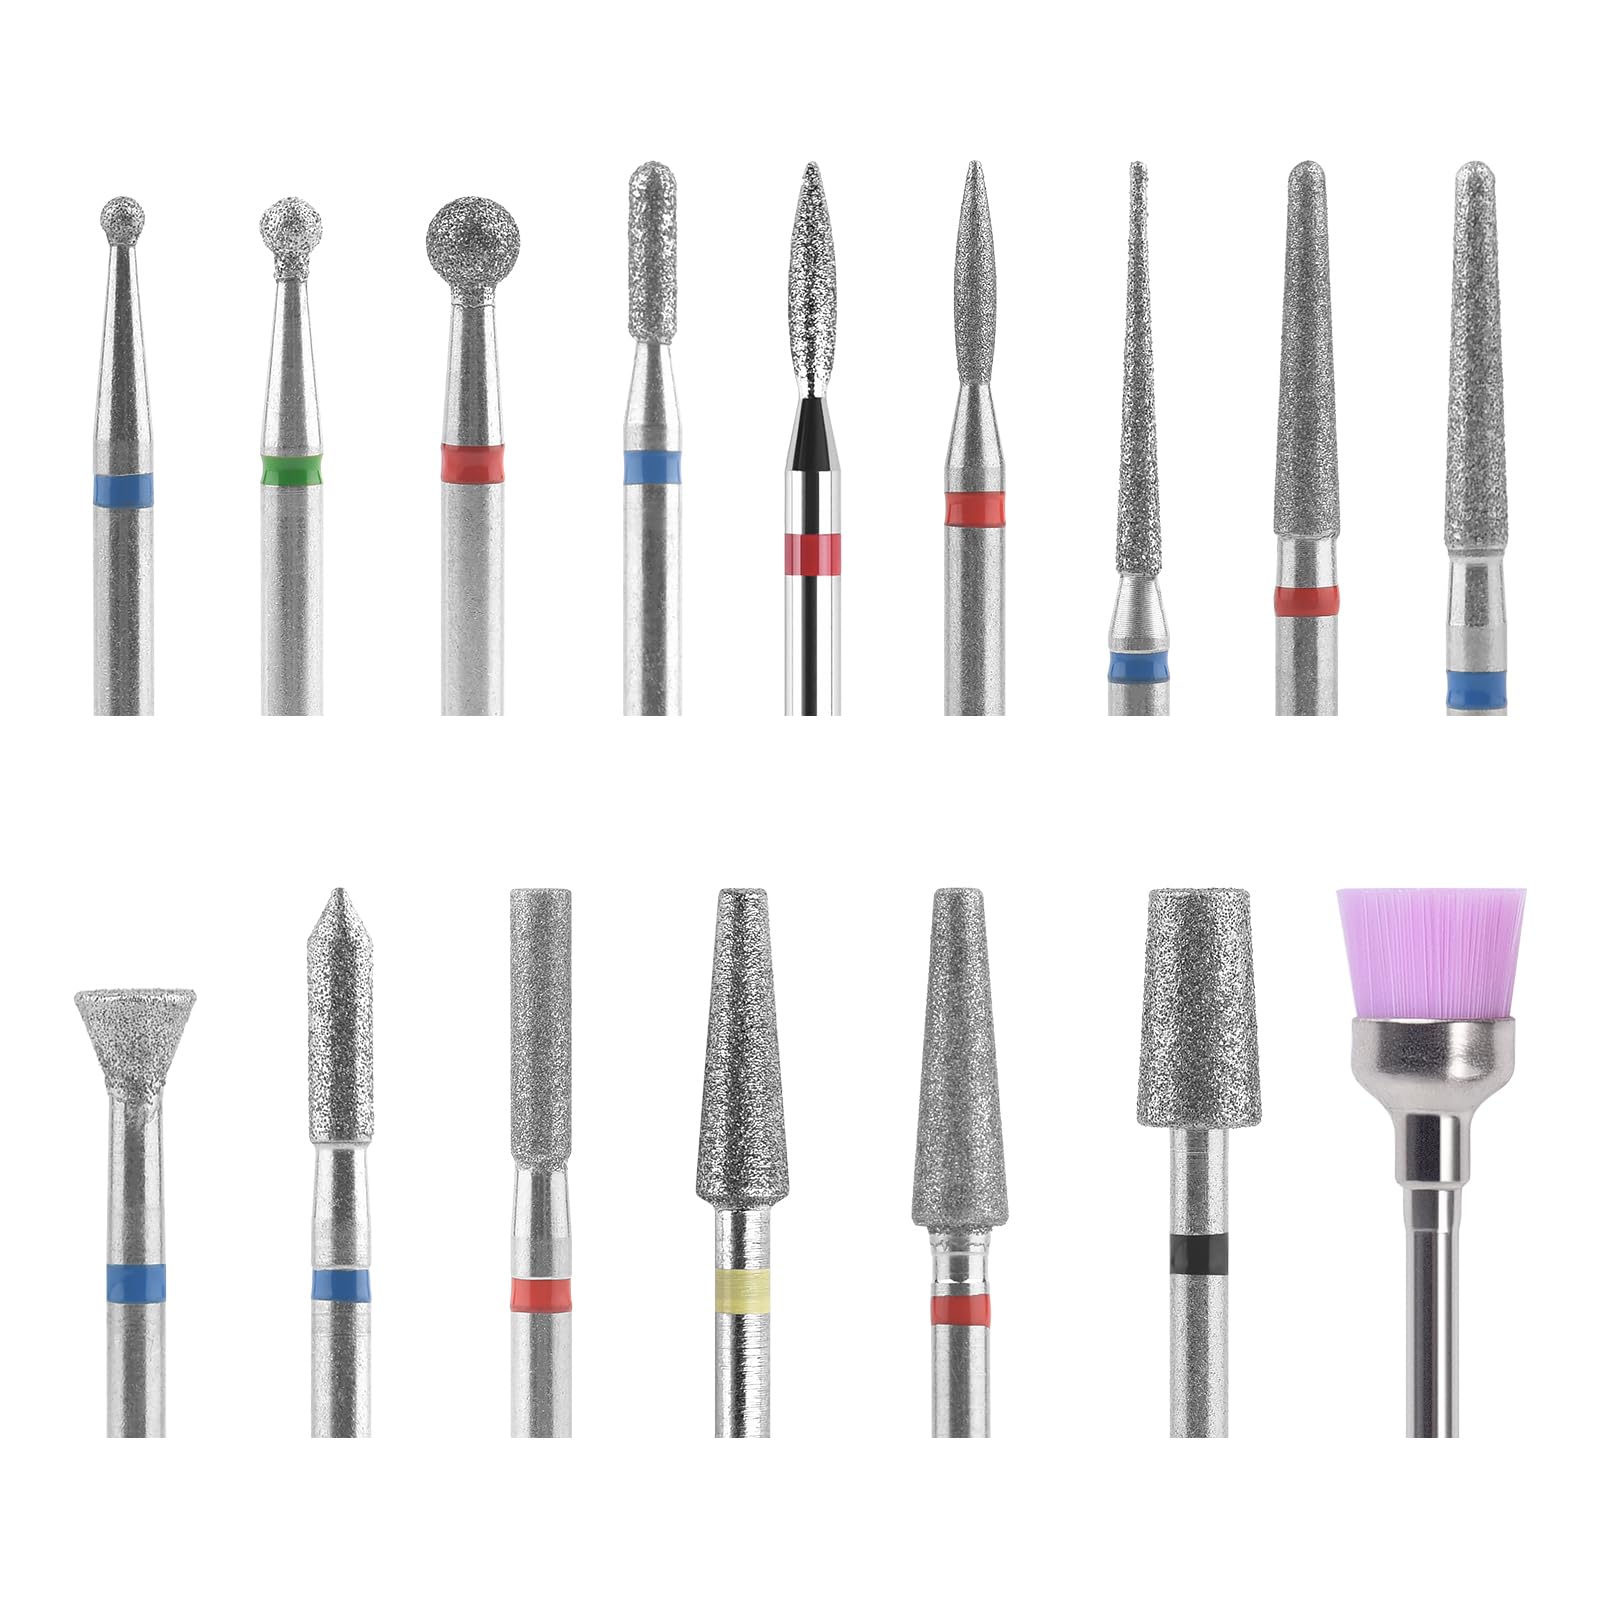 KADS 16pcs Nail Drill Bits Set, 3/32 Inch Diamond Cuticle Nail Bits Kit for Nail Drill E-File, Manicure Pedicure Remover Tools for Acrylic Gel Nails, Salon Home Nail Care Supplies, Silver